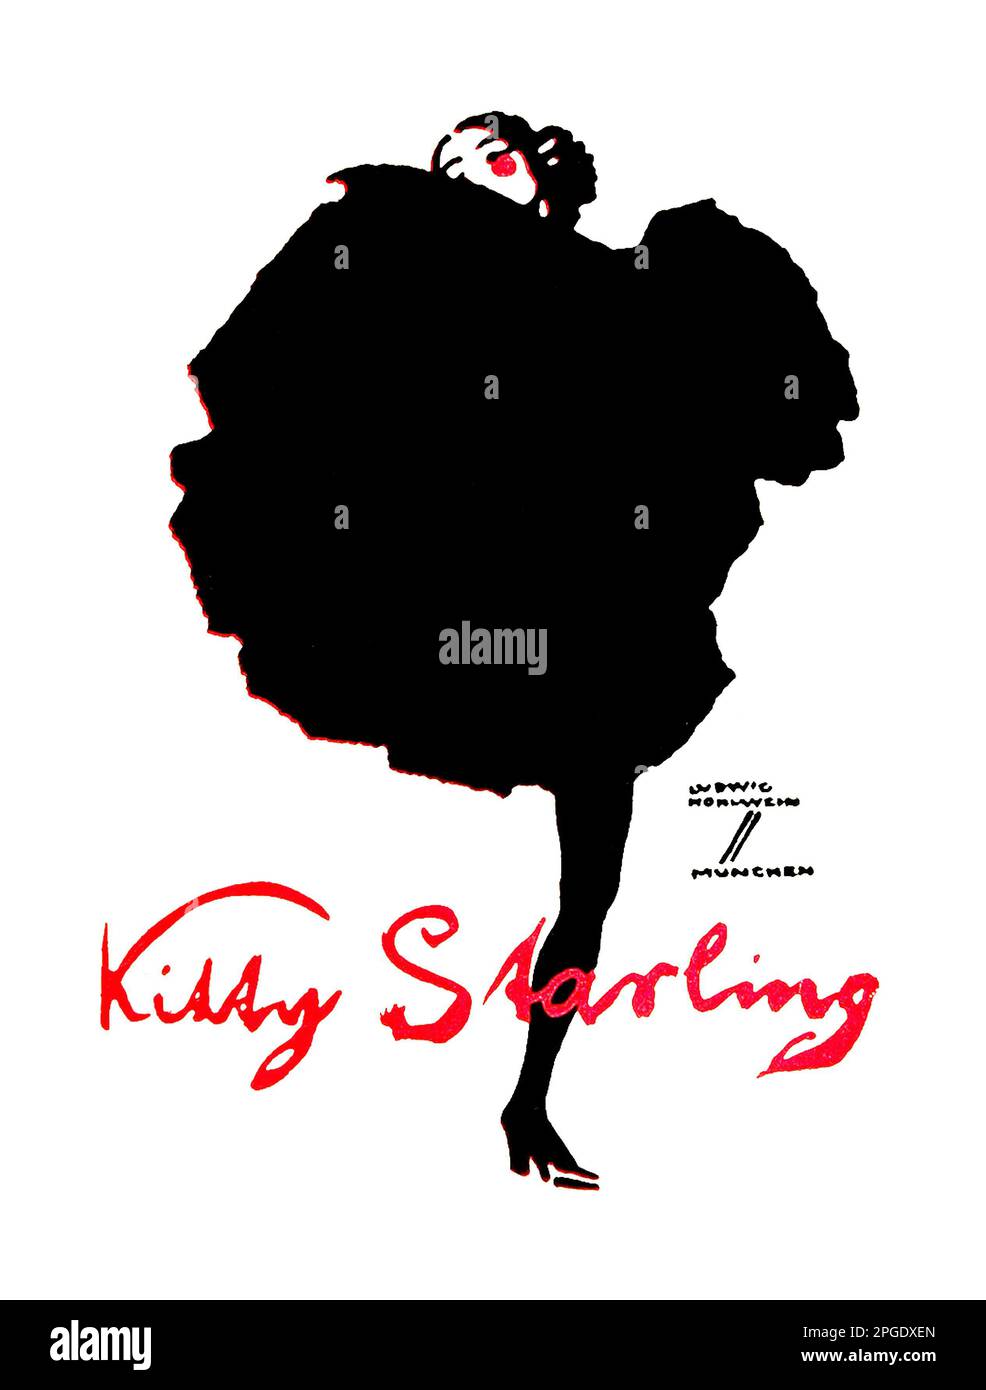 Ludwig Hohlwein (german poster artist) - Kitty Starling - dancer - 1924 Stock Photo